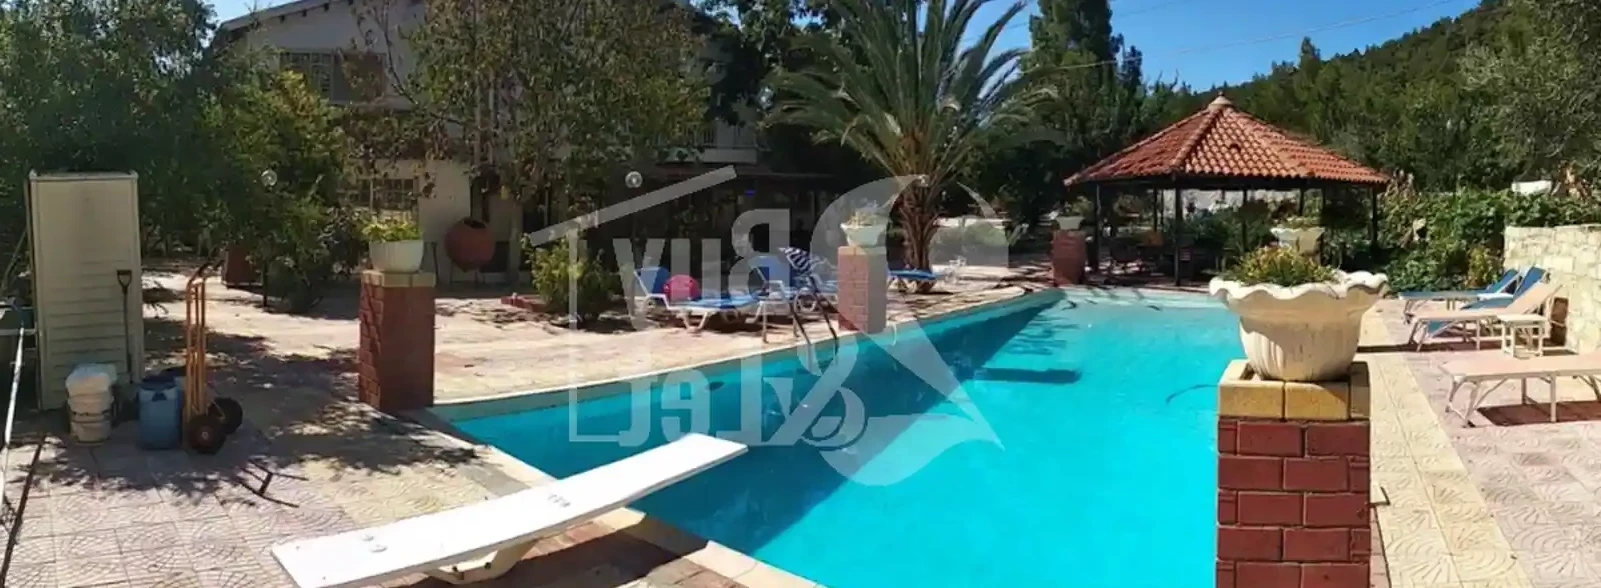 5-bedroom villa fоr sаle €700.000, image 1